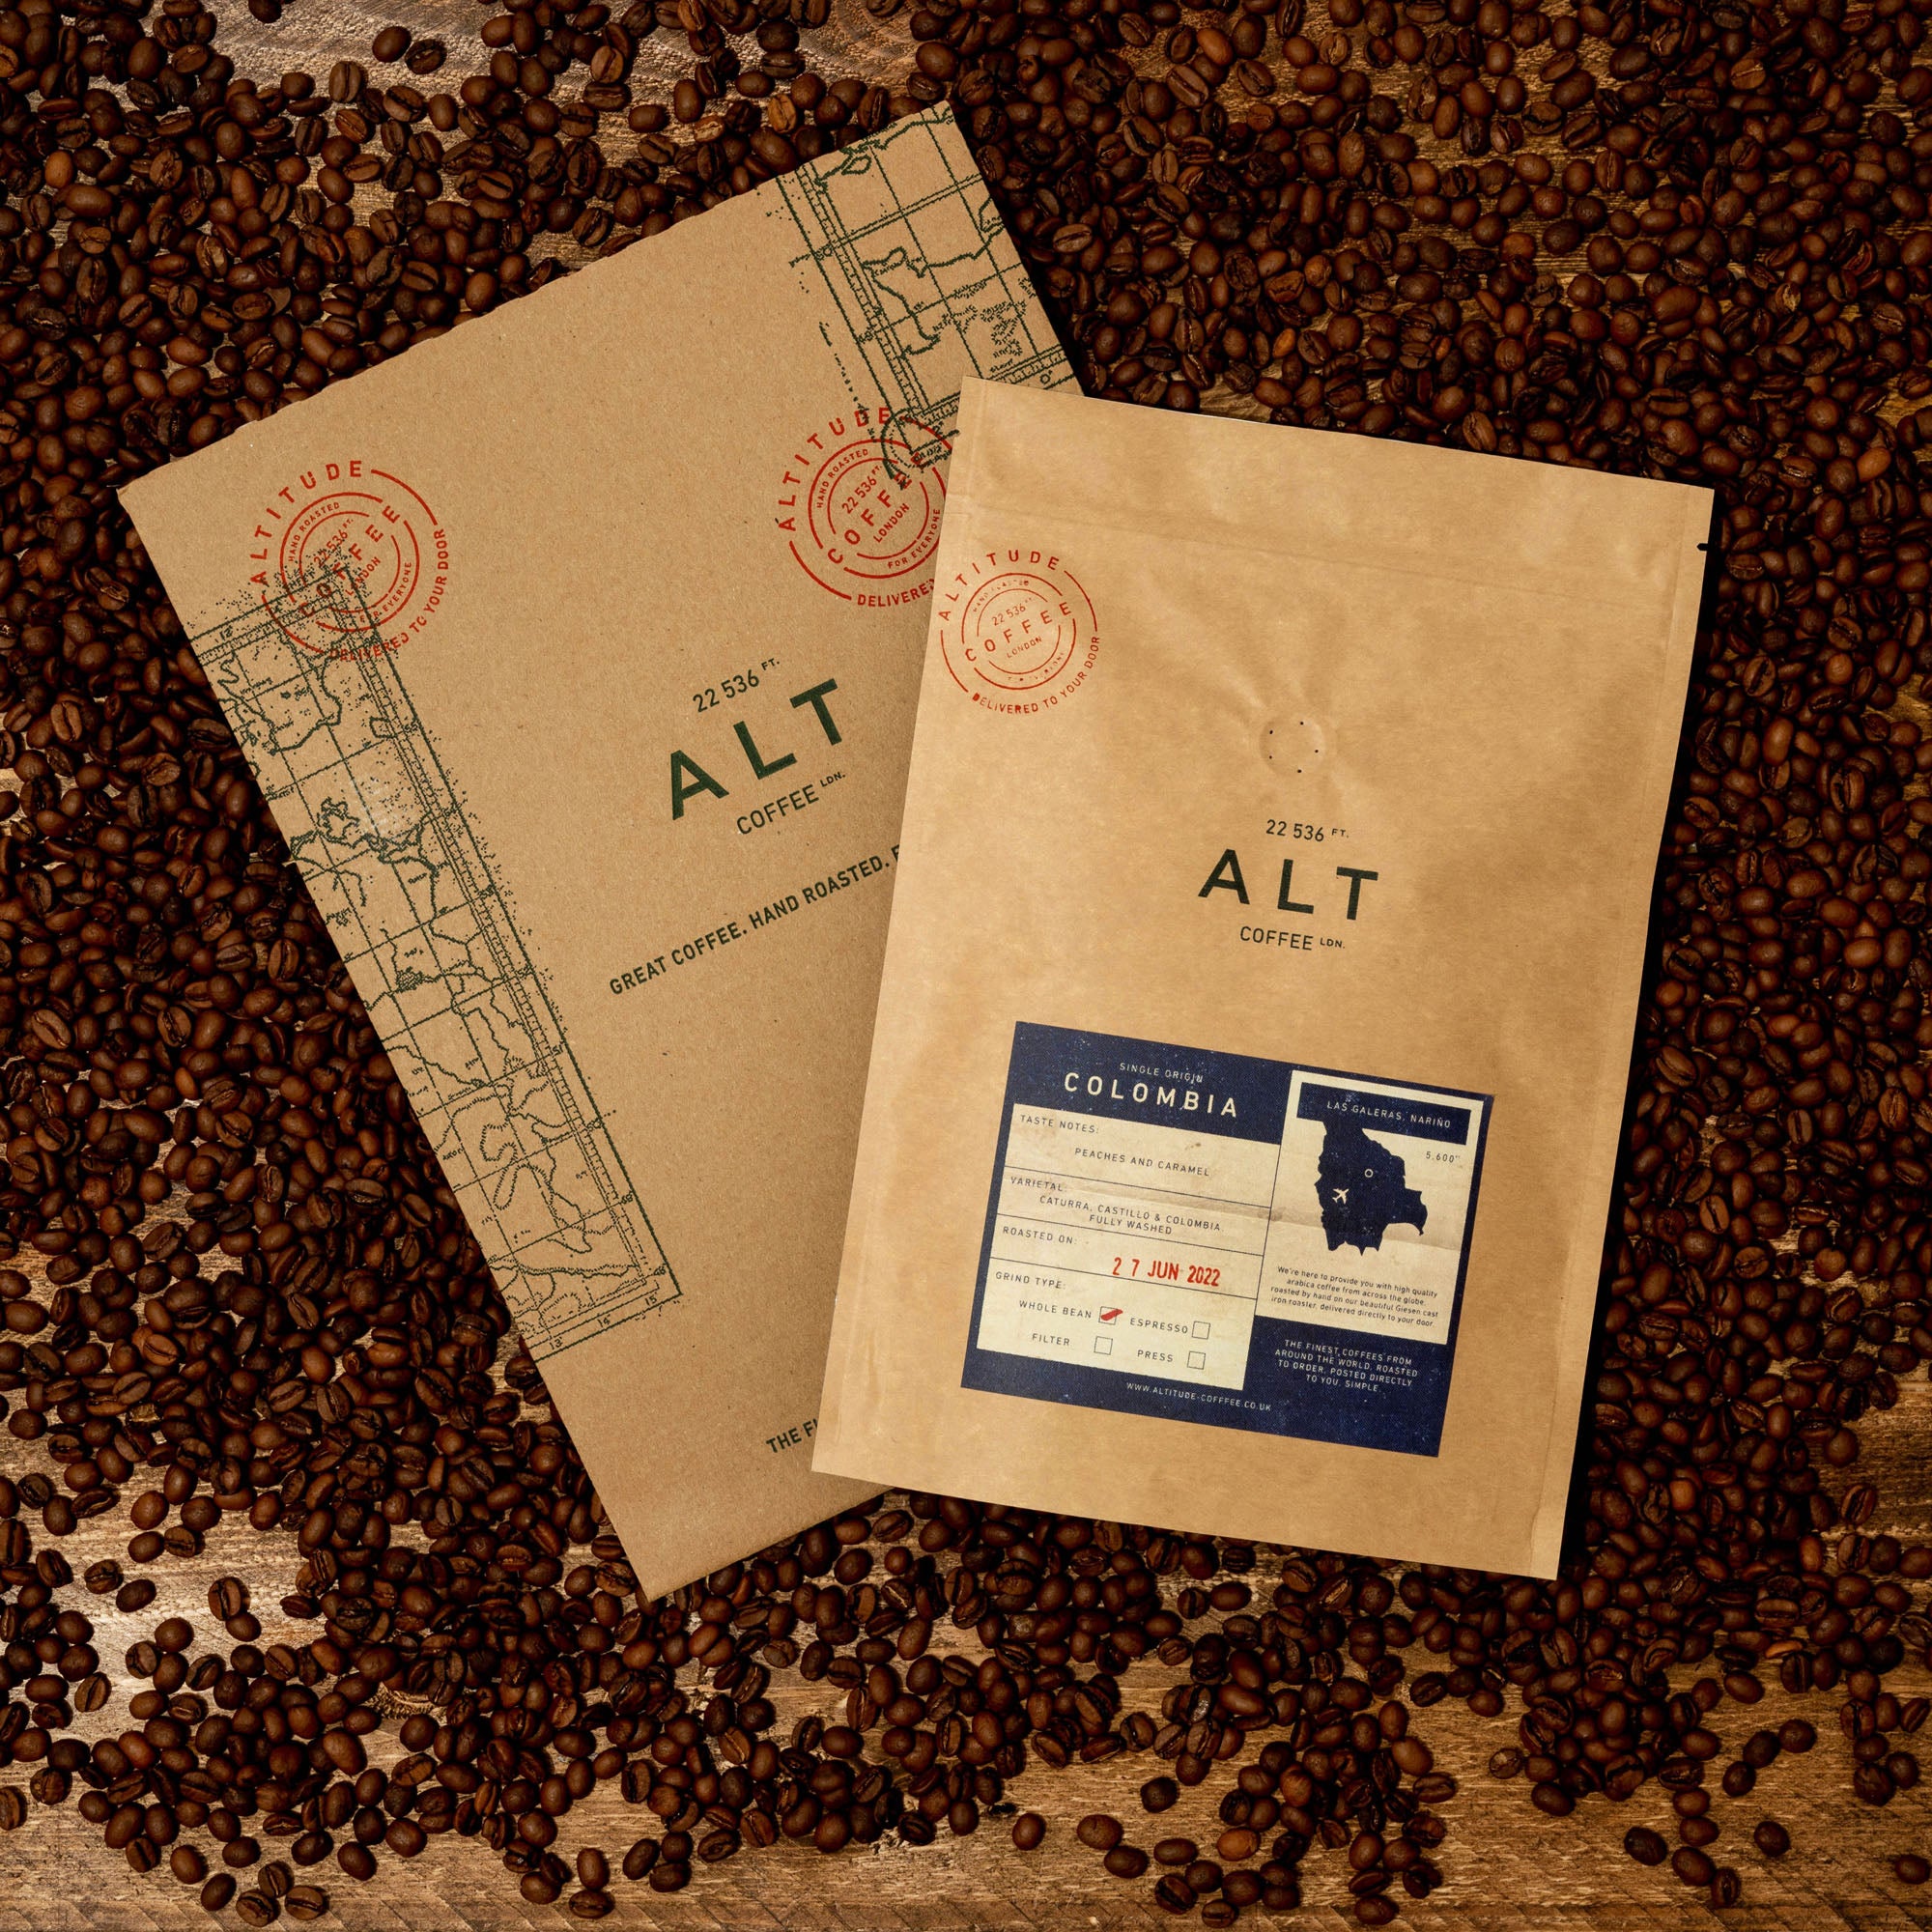 Altitude Coffee London single origin coffee subscription and postal envelope